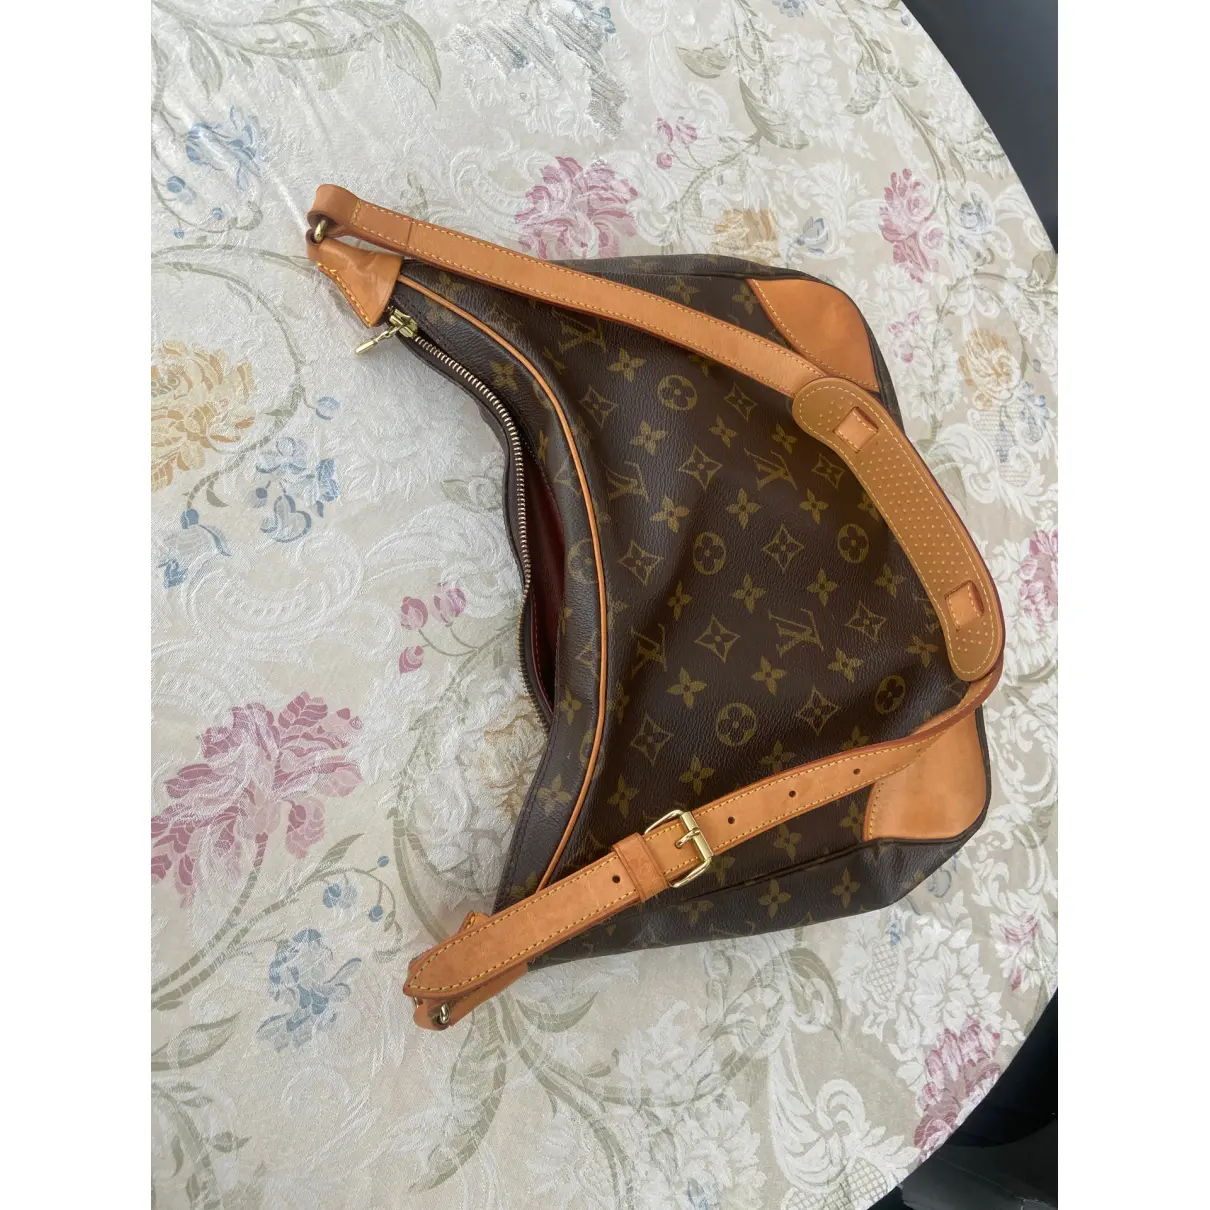 Buy Louis Vuitton Boulogne crossbody bag online